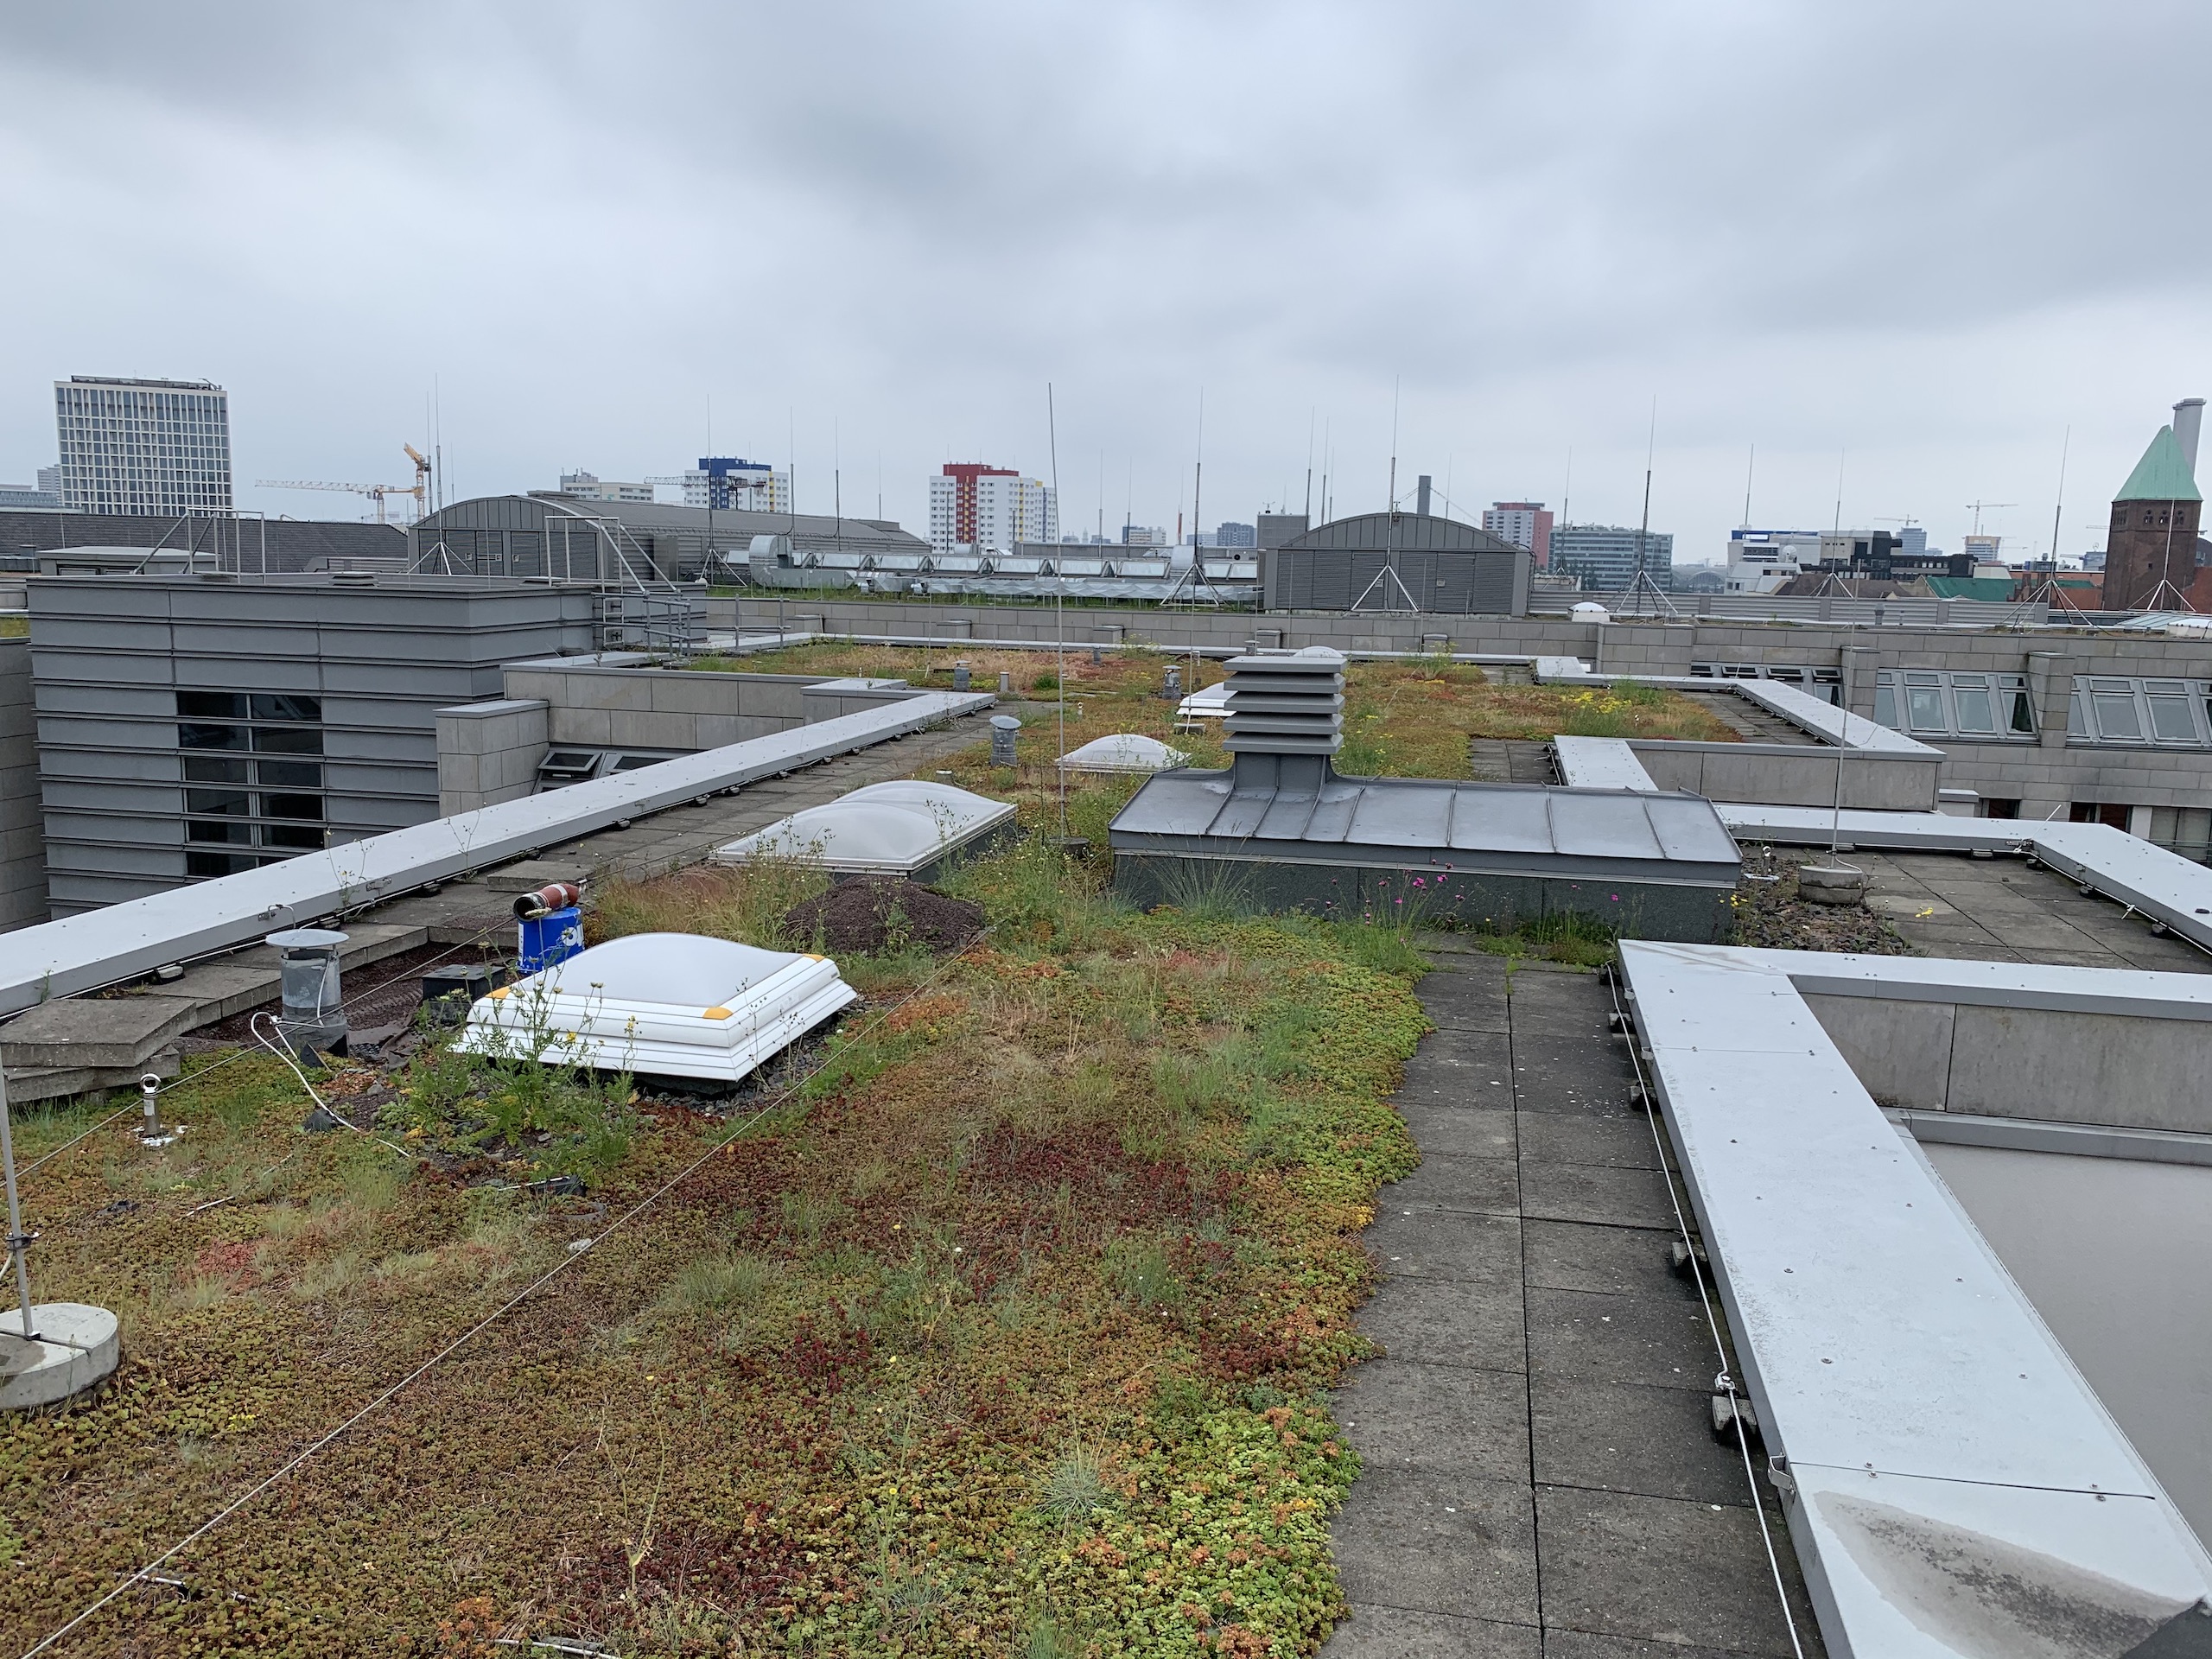 Dachbegrünung, Berliner Wasserbetriebe